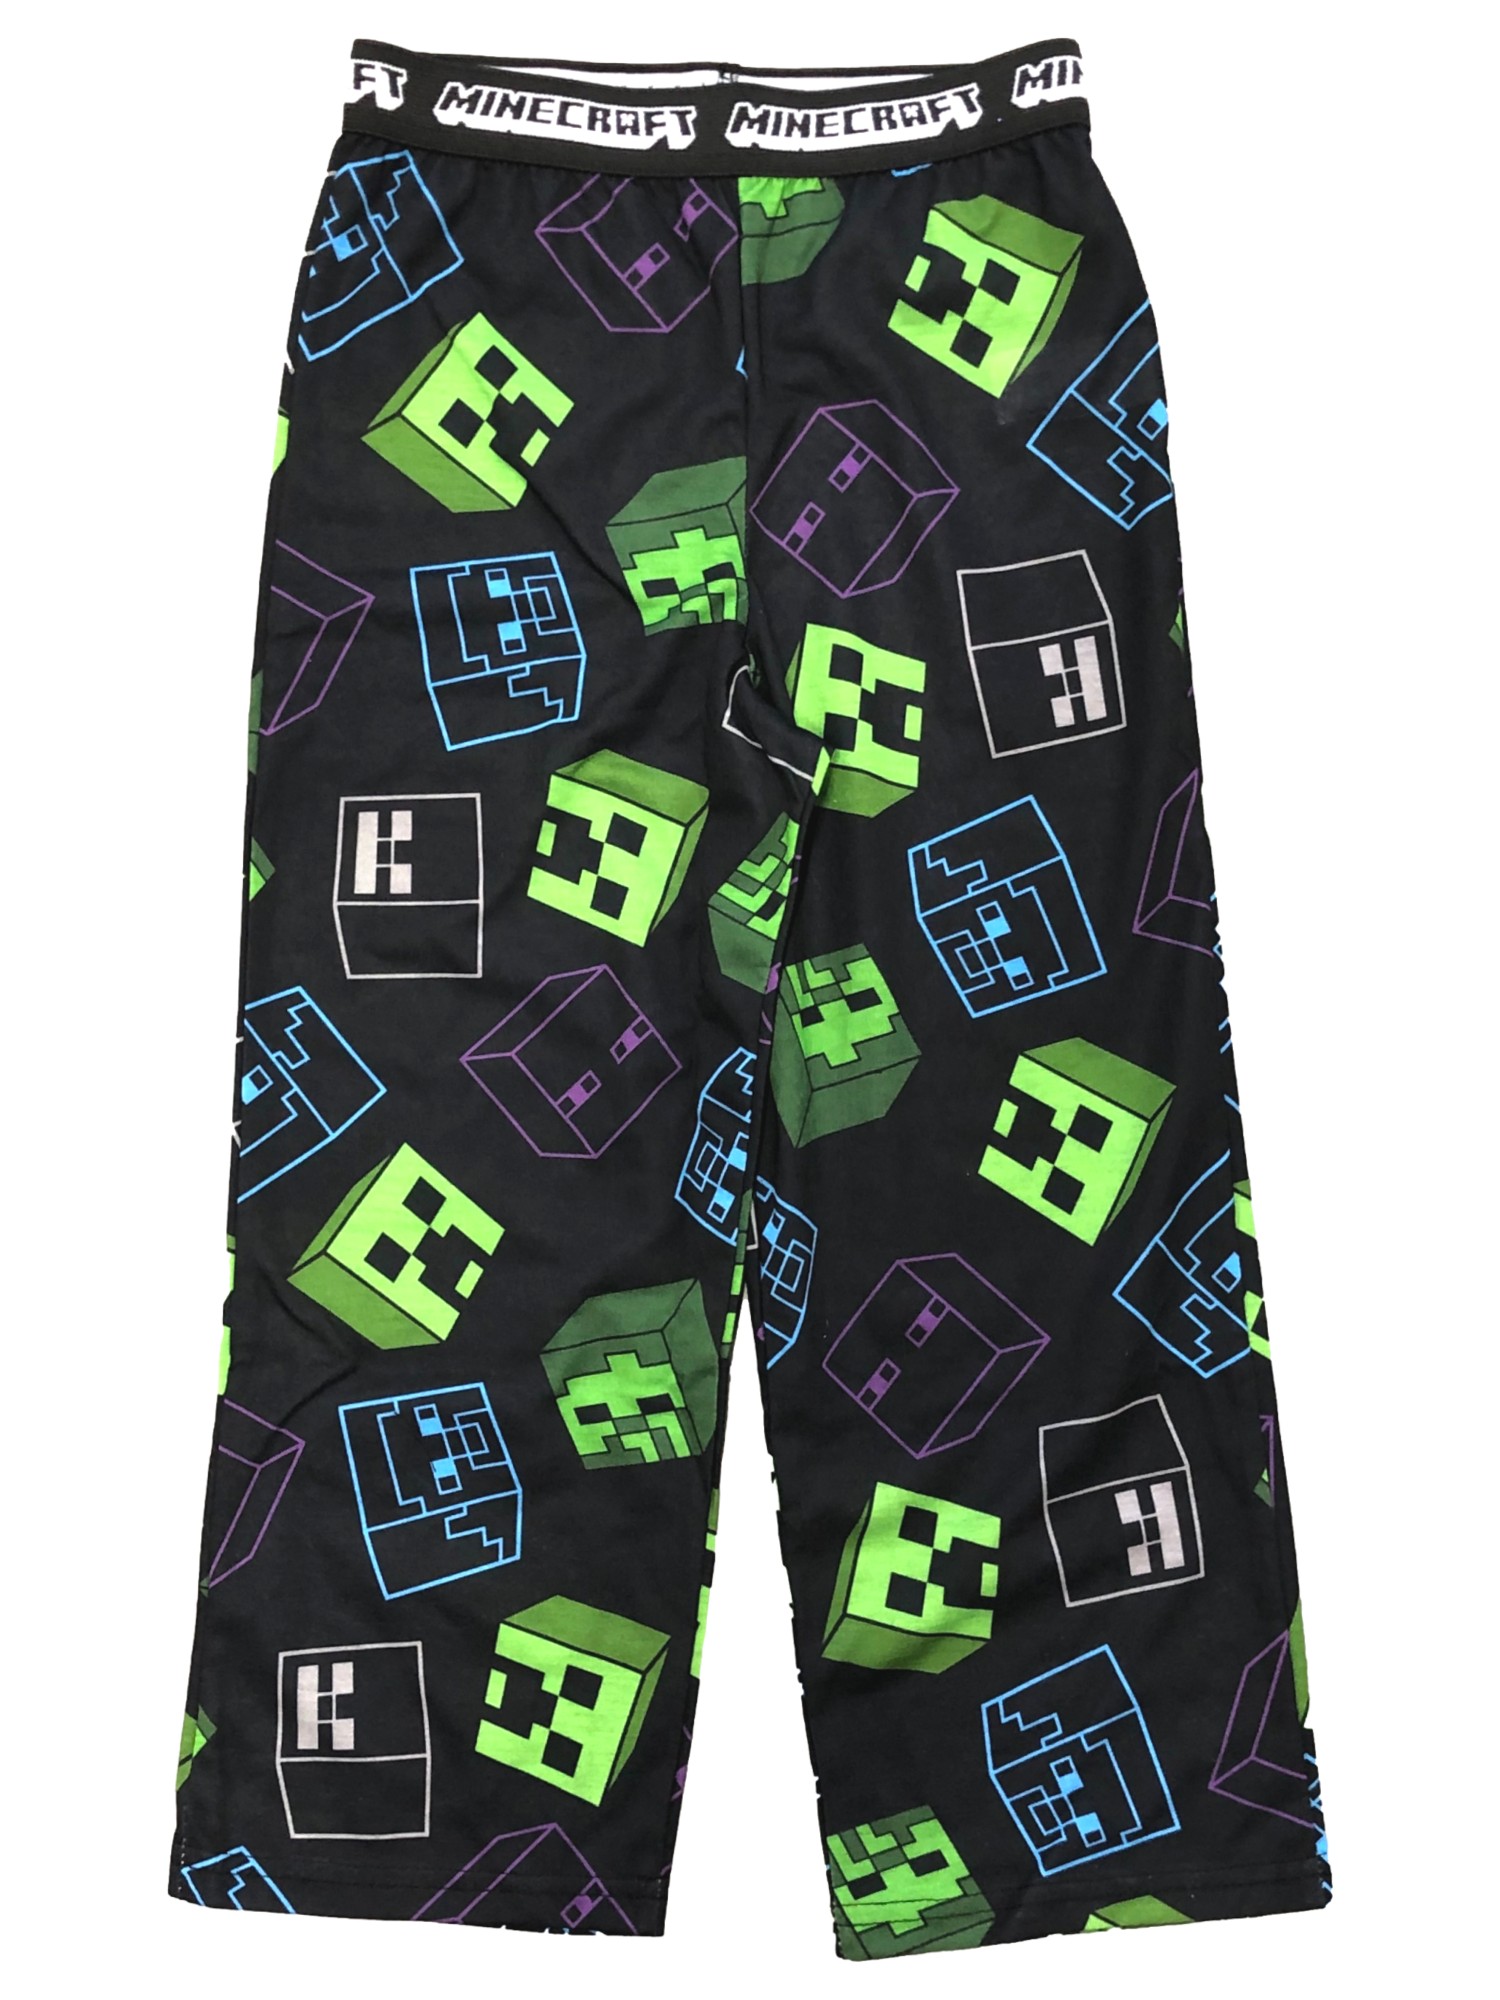 Minecraft Boys Black Green Mine Craft Pajama Bottoms Lounge Sleep Pants S (4-5)